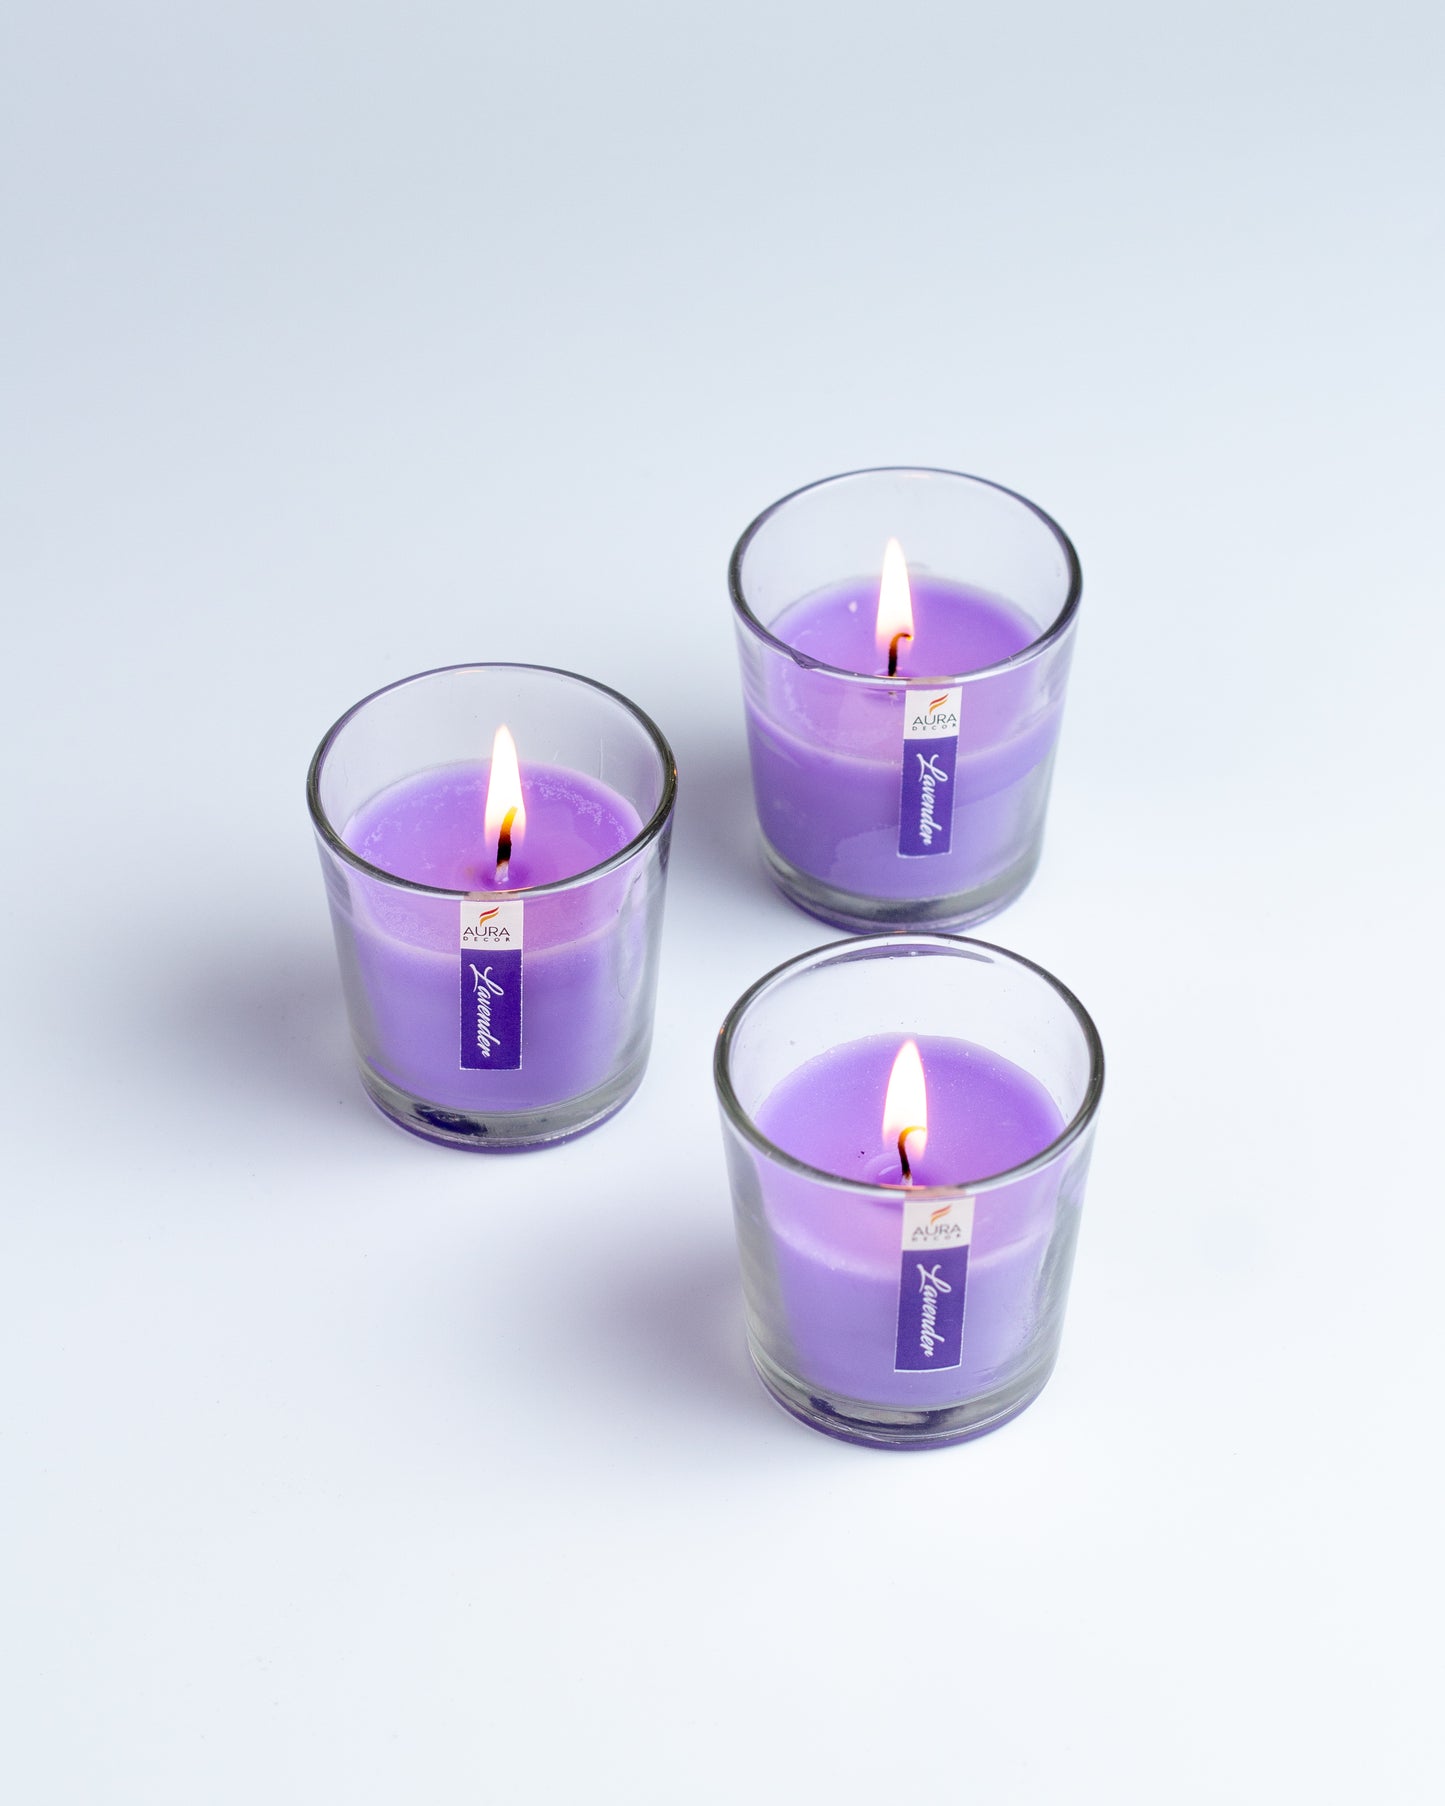 AuraDecor Glass Set of 3 Fragrance Votive Candle